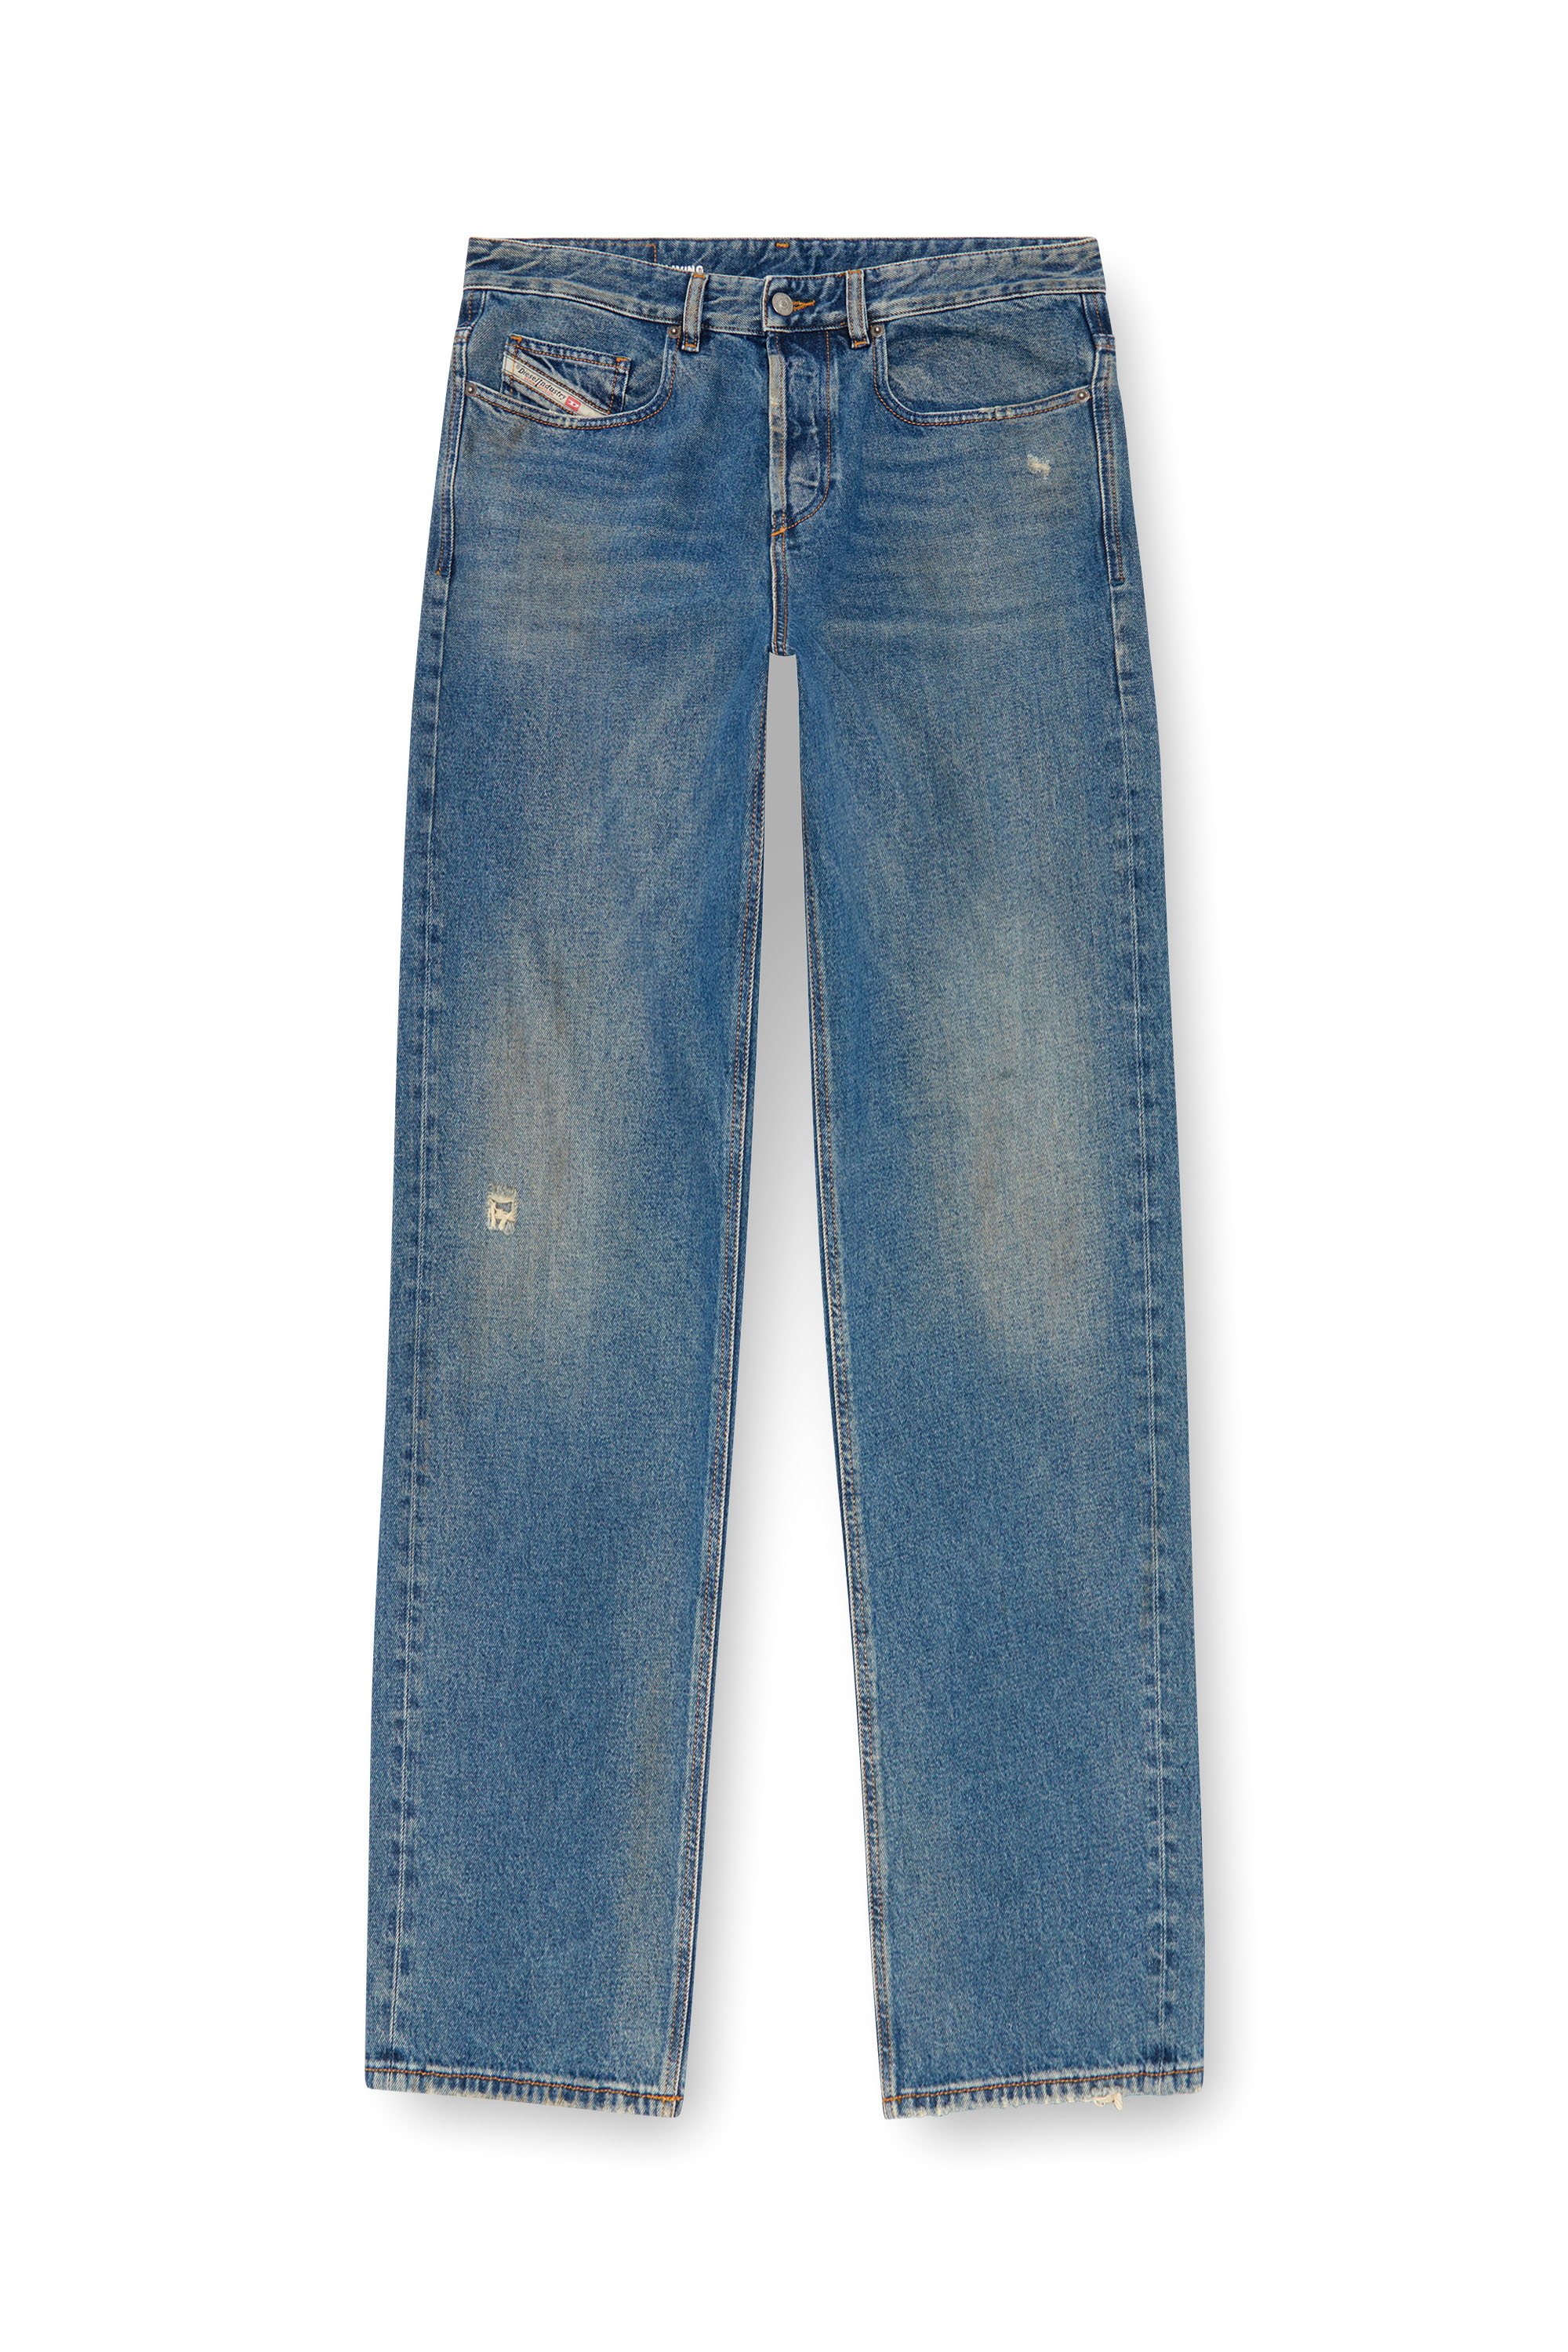 Diesel - Straight Jeans 2001 D-Macro 09J79, Hombre Straight Jeans - 2001 D-Macro in Azul marino - Image 3